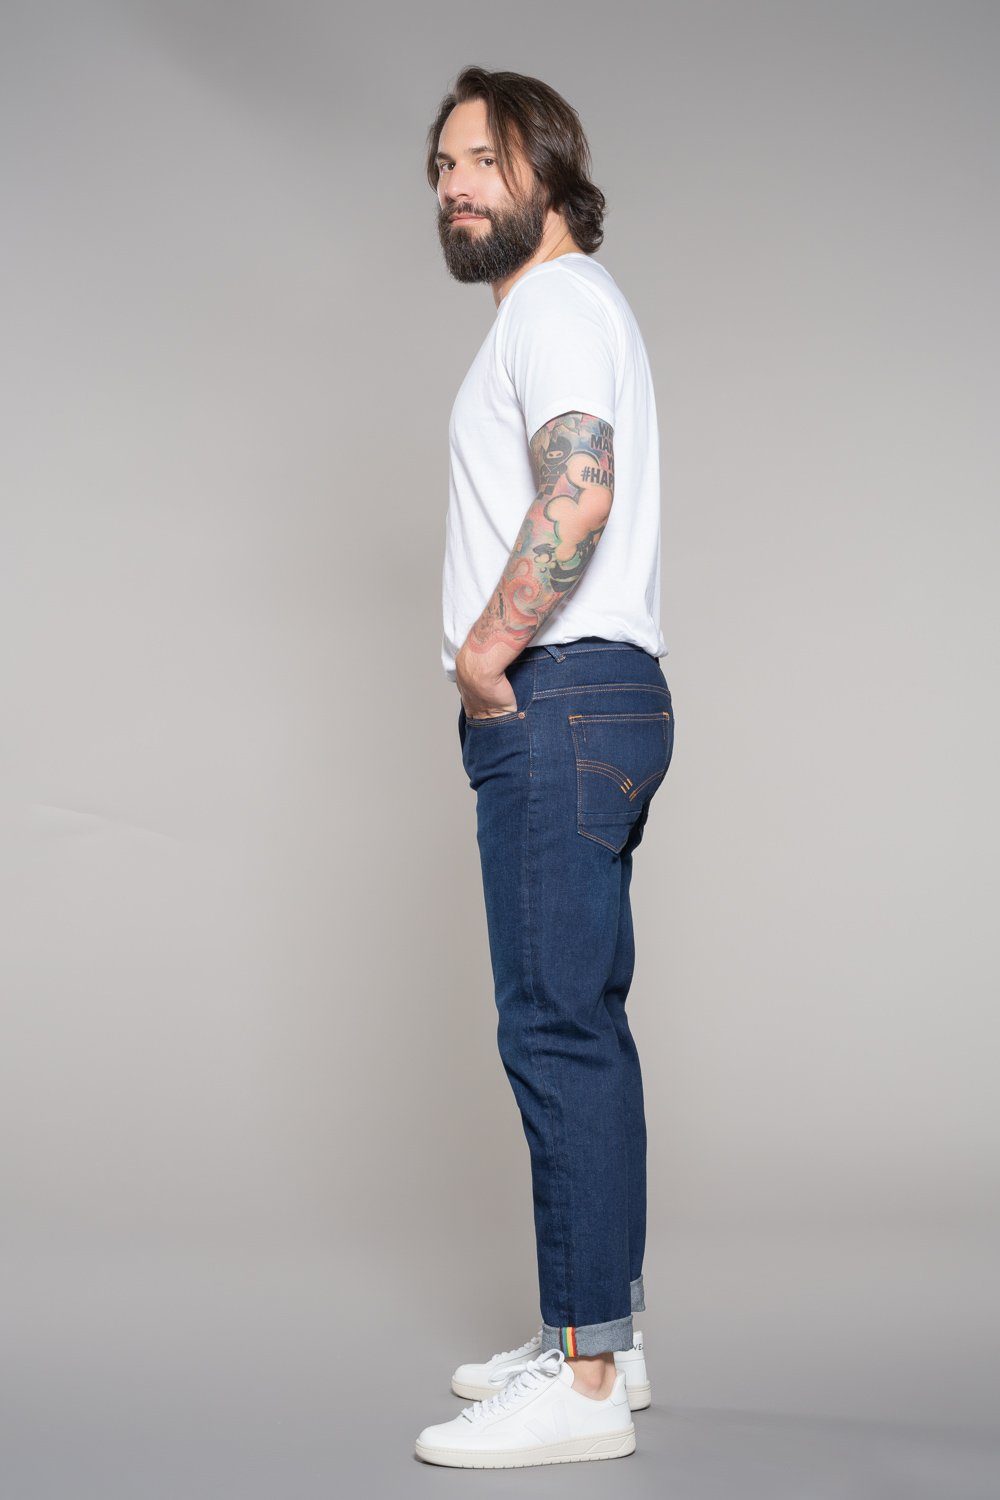 Feuervogl Slim-fit-Jeans fv-West:minster, Slim Fit, Fit, Slim Classic Waist Unisex Medium 5-Pocket-Style, Unisex, Waist, Blue Medium